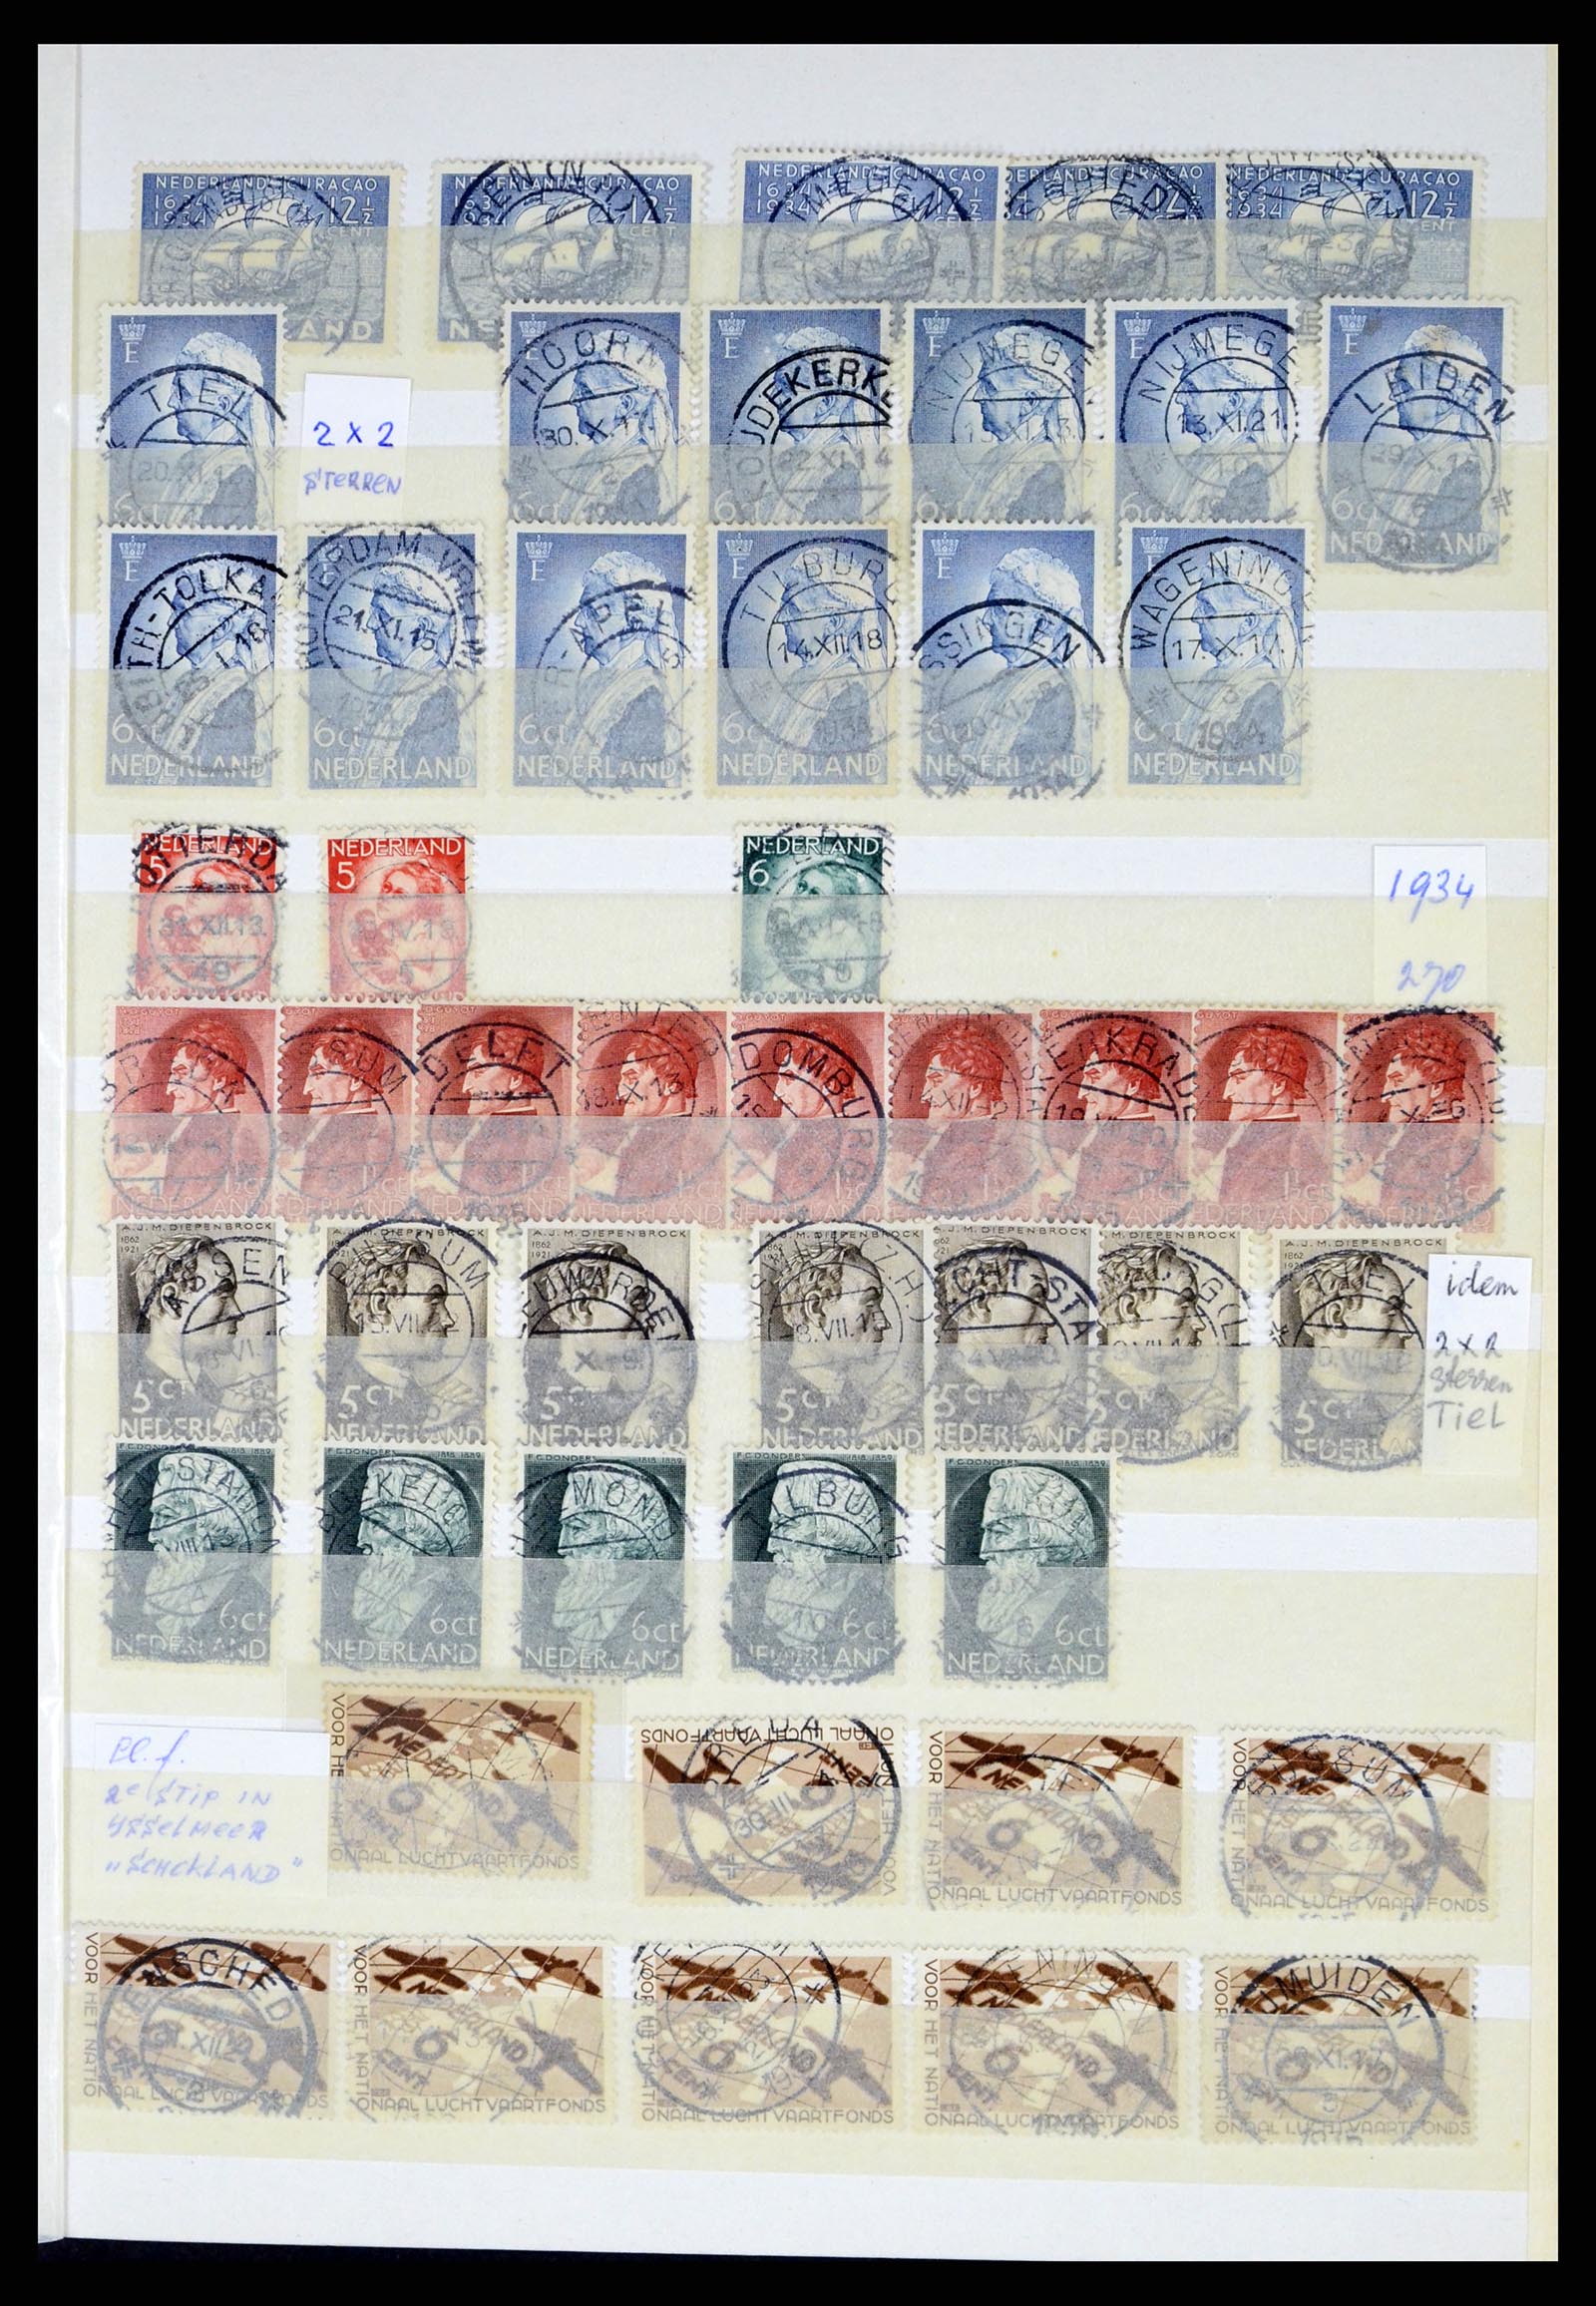 37424 019 - Stamp collection 37424 Netherlands shortbar cancels.